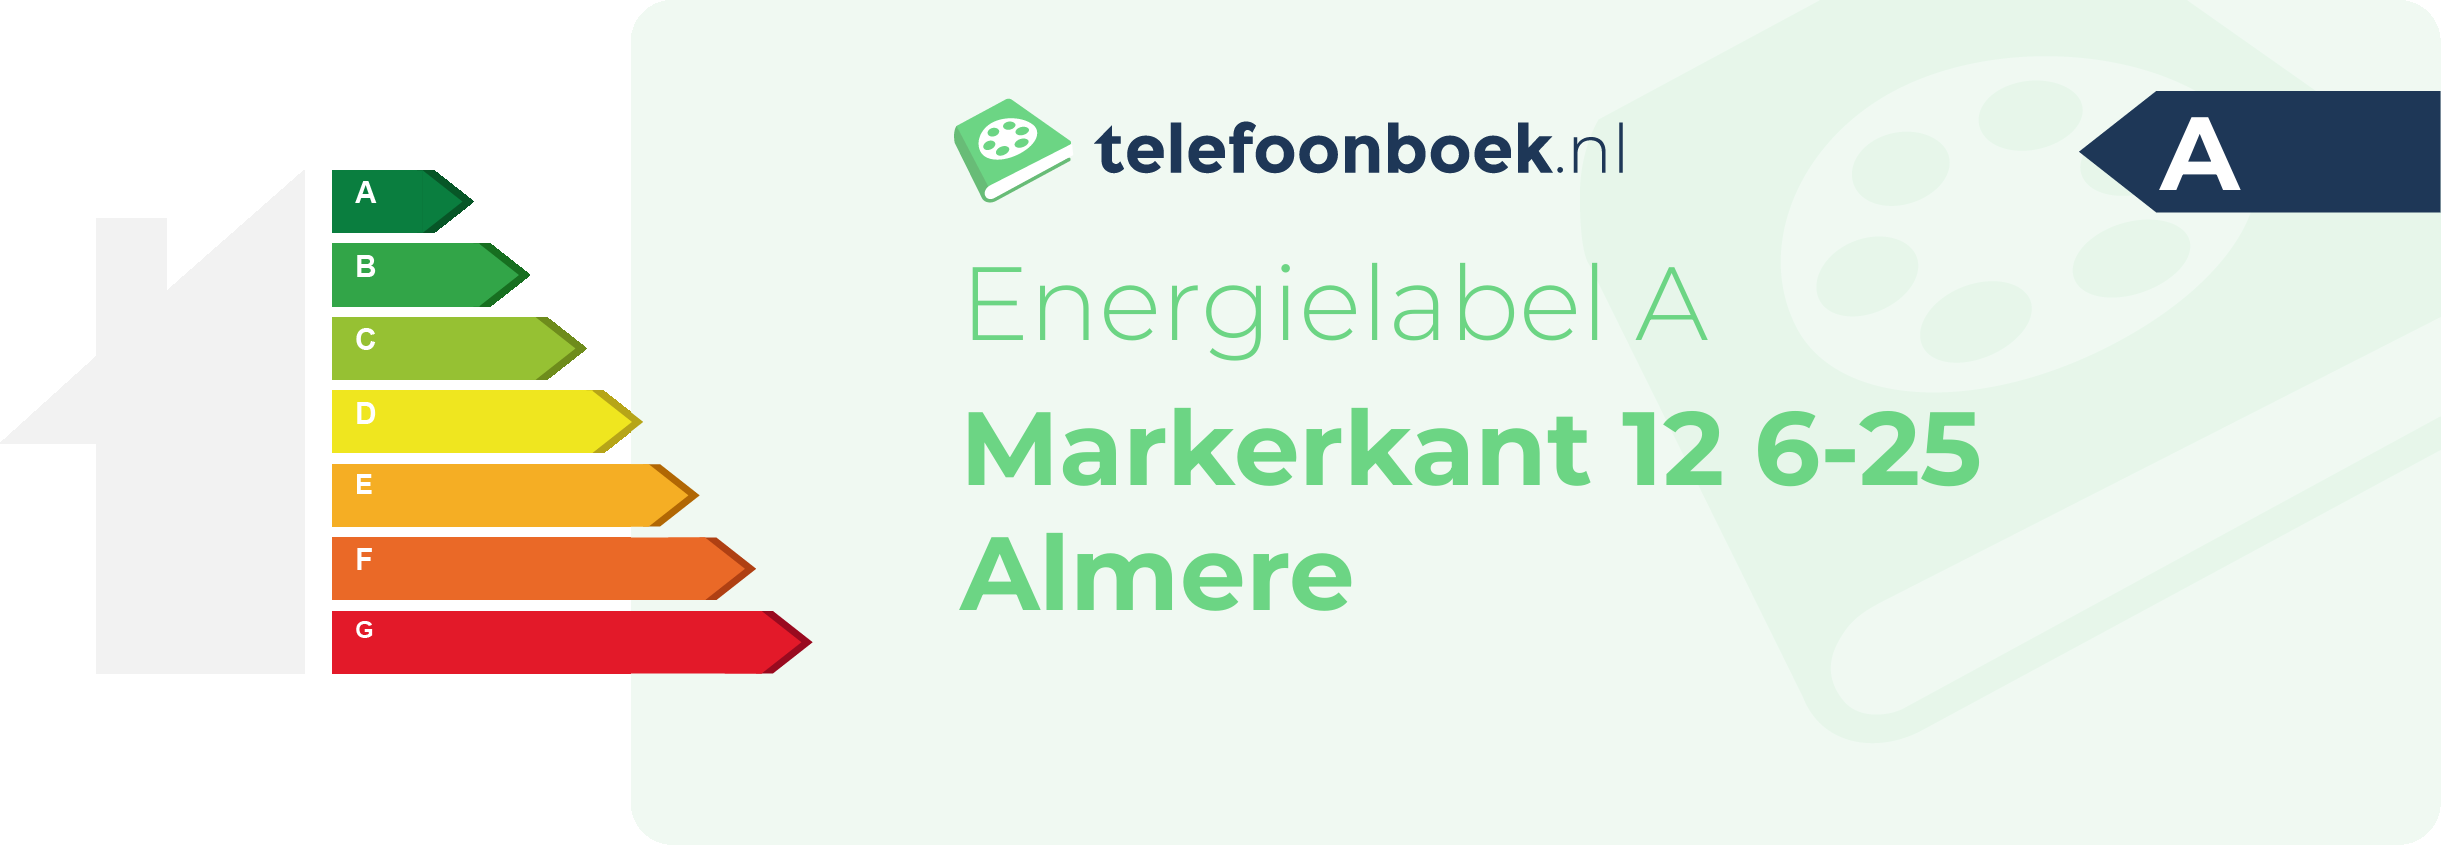 Energielabel Markerkant 12 6-25 Almere